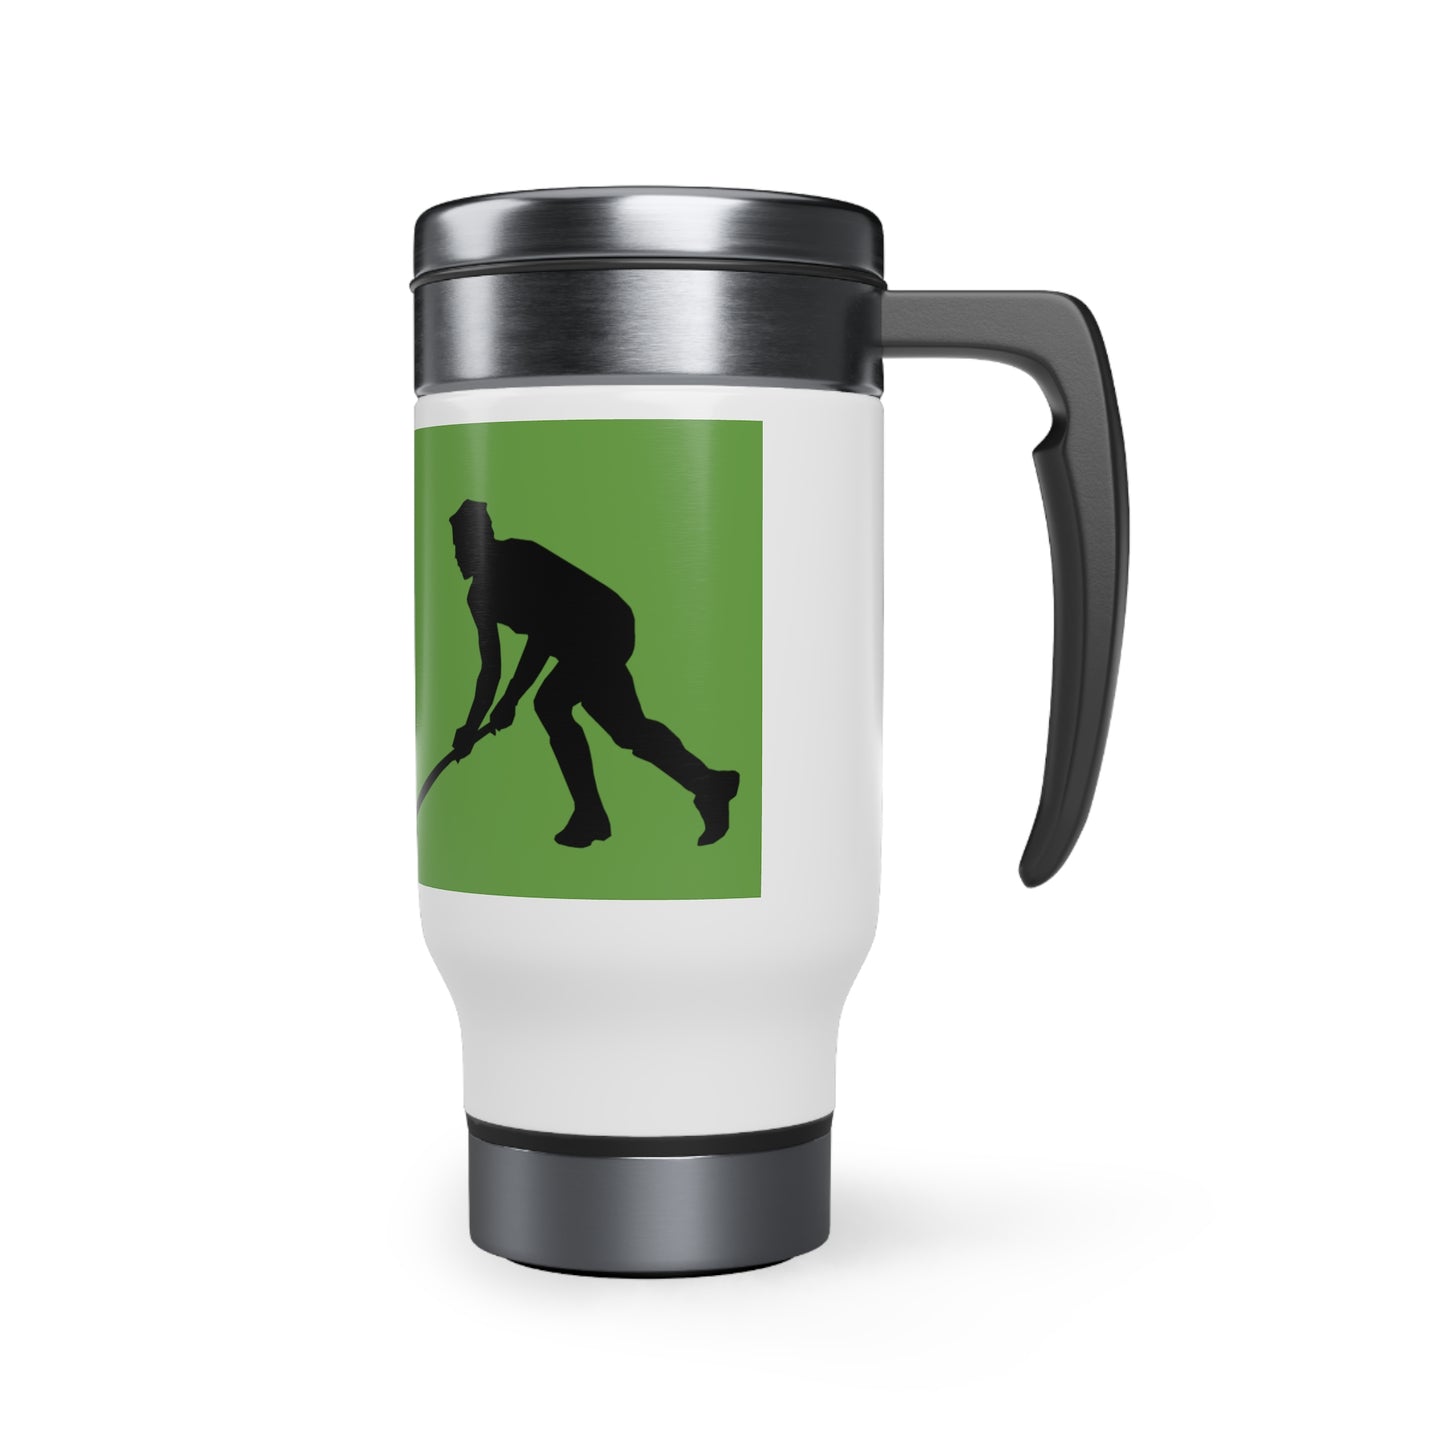 Stainless Steel Travel Mug with Handle, 14oz: Hockey Green